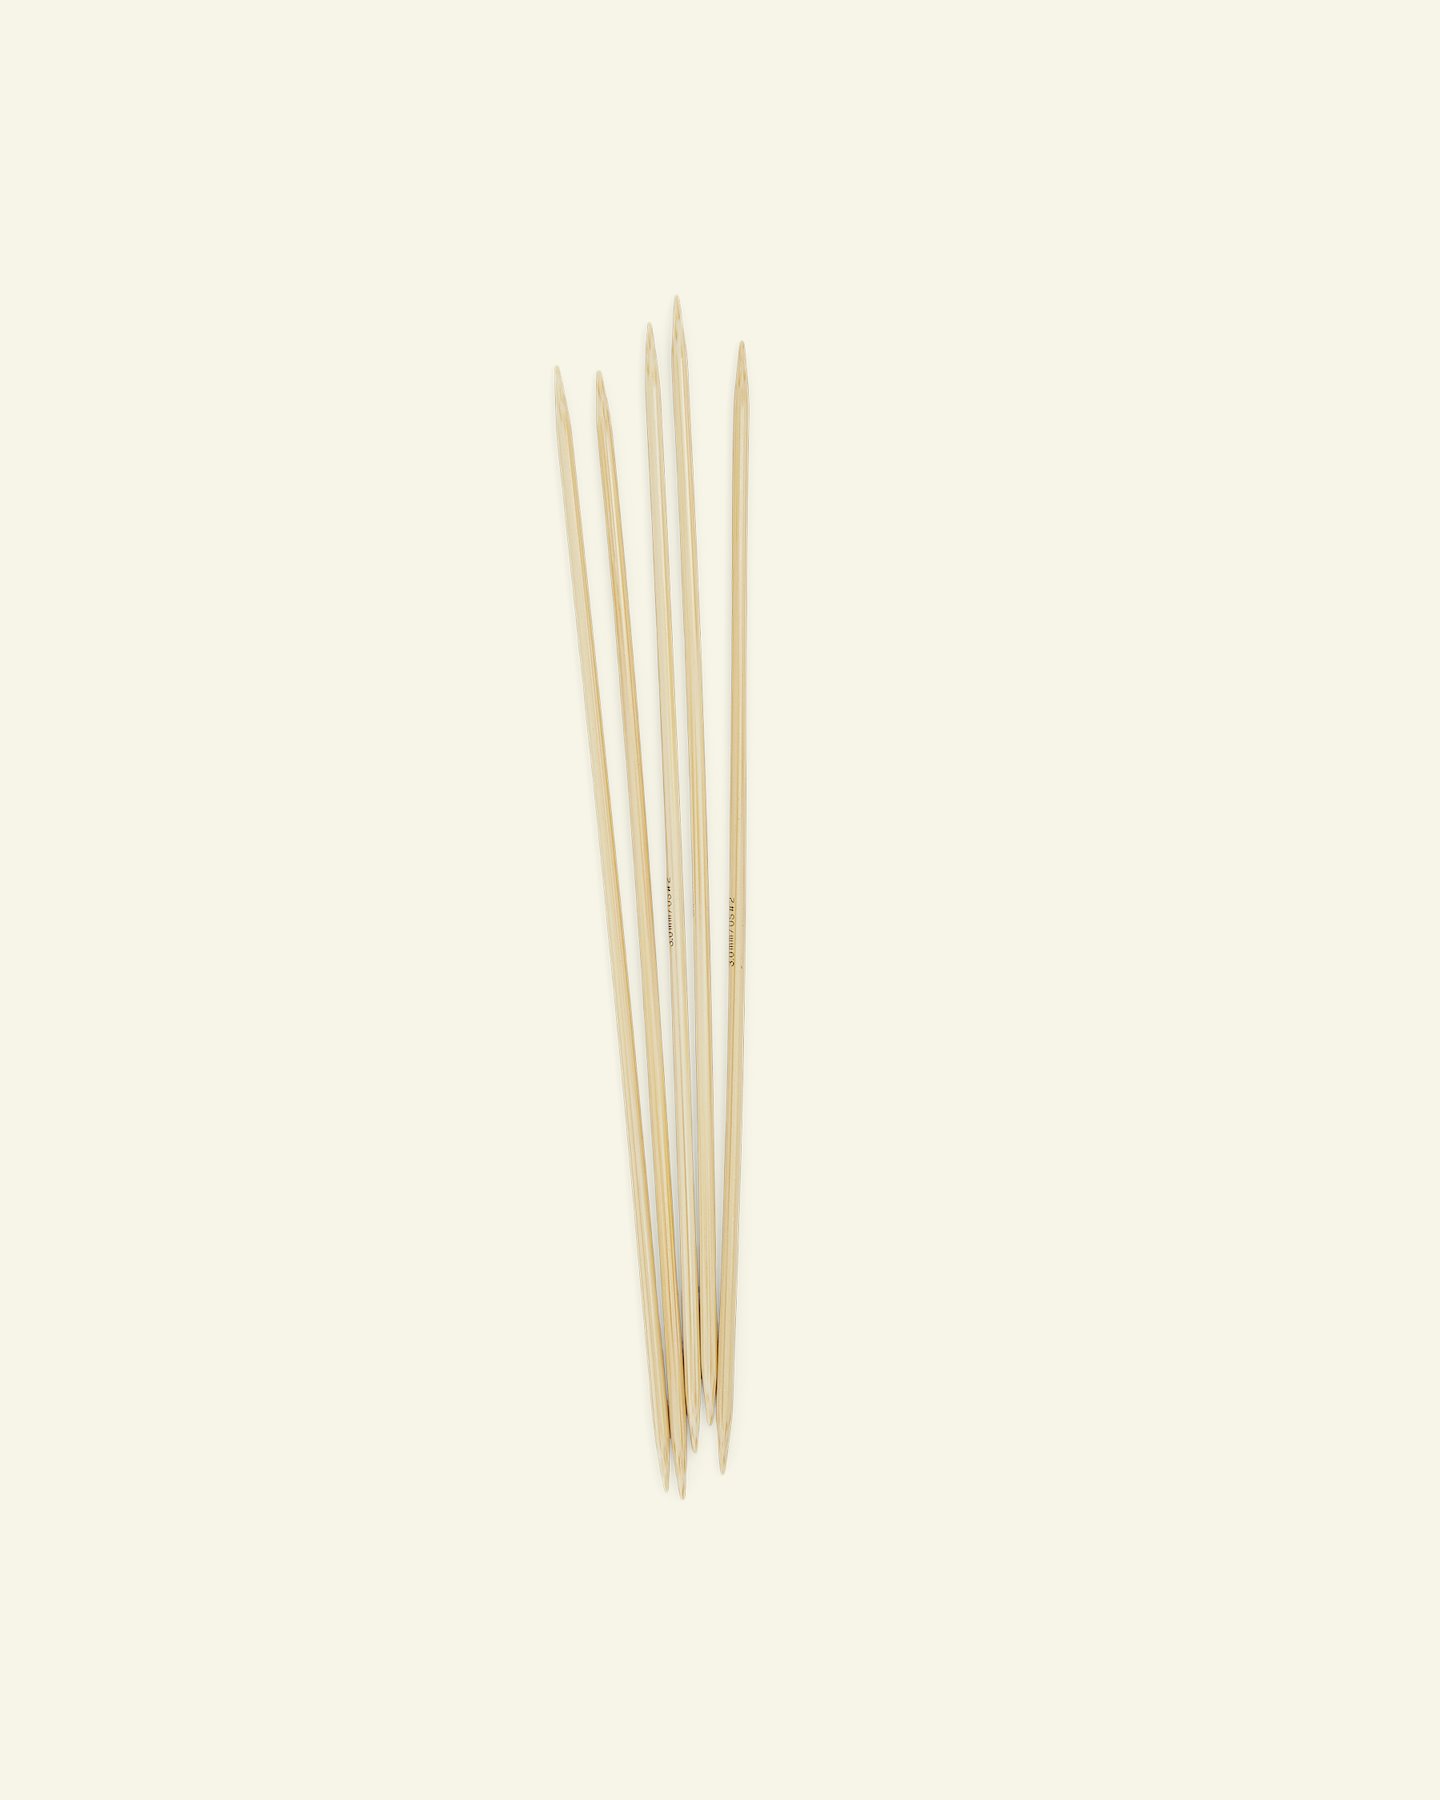 Addi Strumpfstricknadel bambus 20cm 3,0m 83274_pack